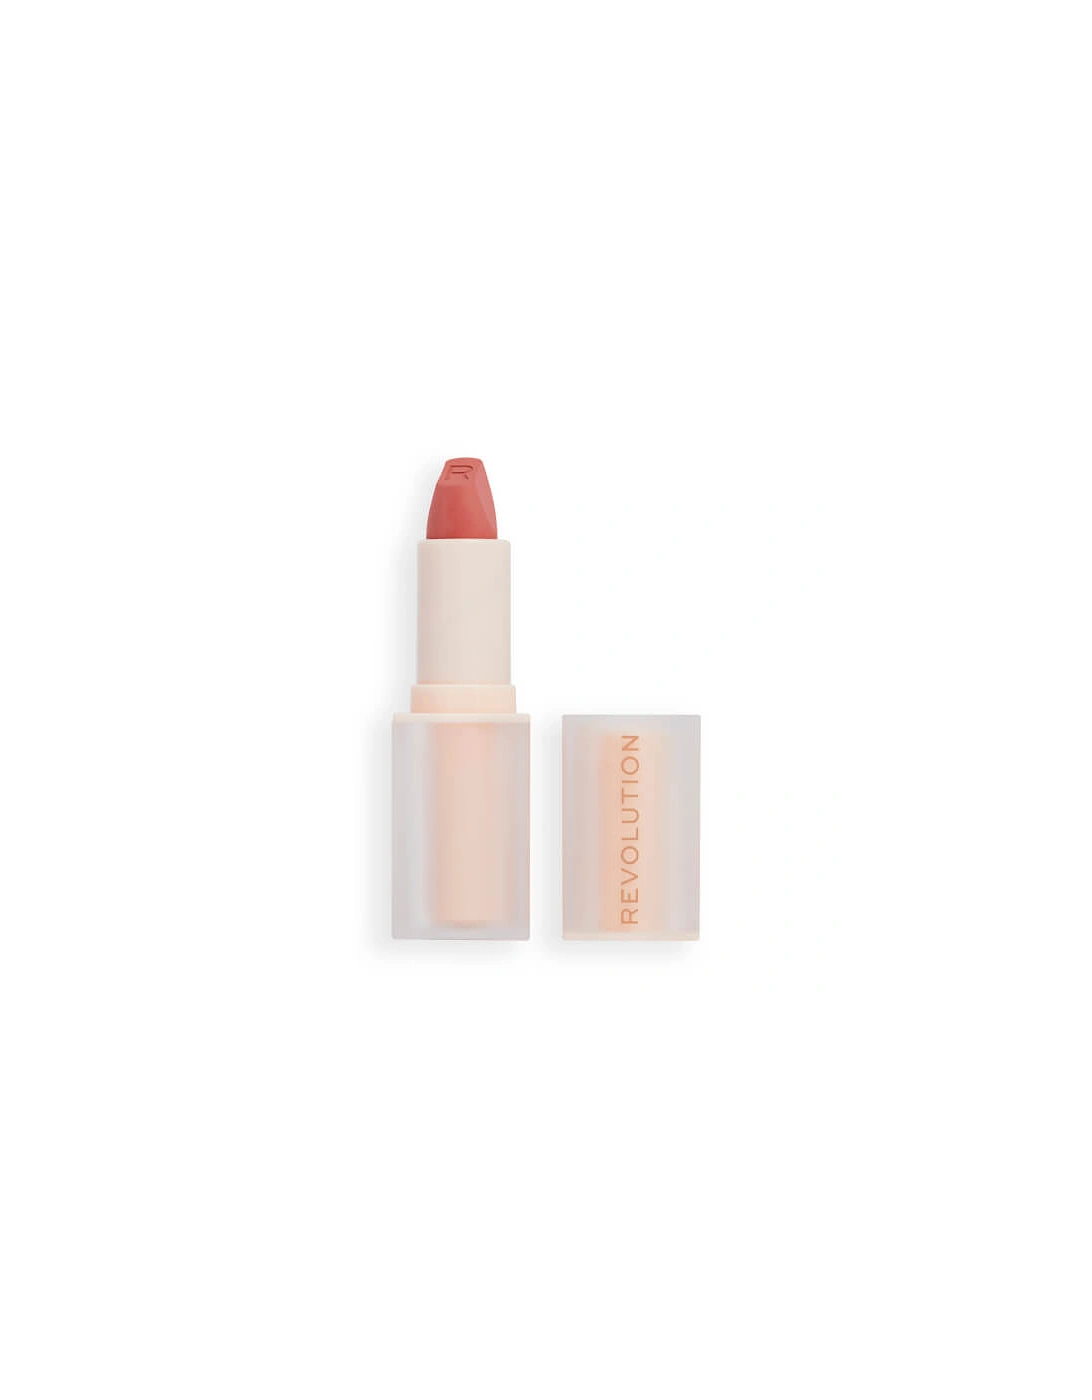 Makeup Lip Allure Soft Satin Lipstick - Brunch Pink Nude, 2 of 1